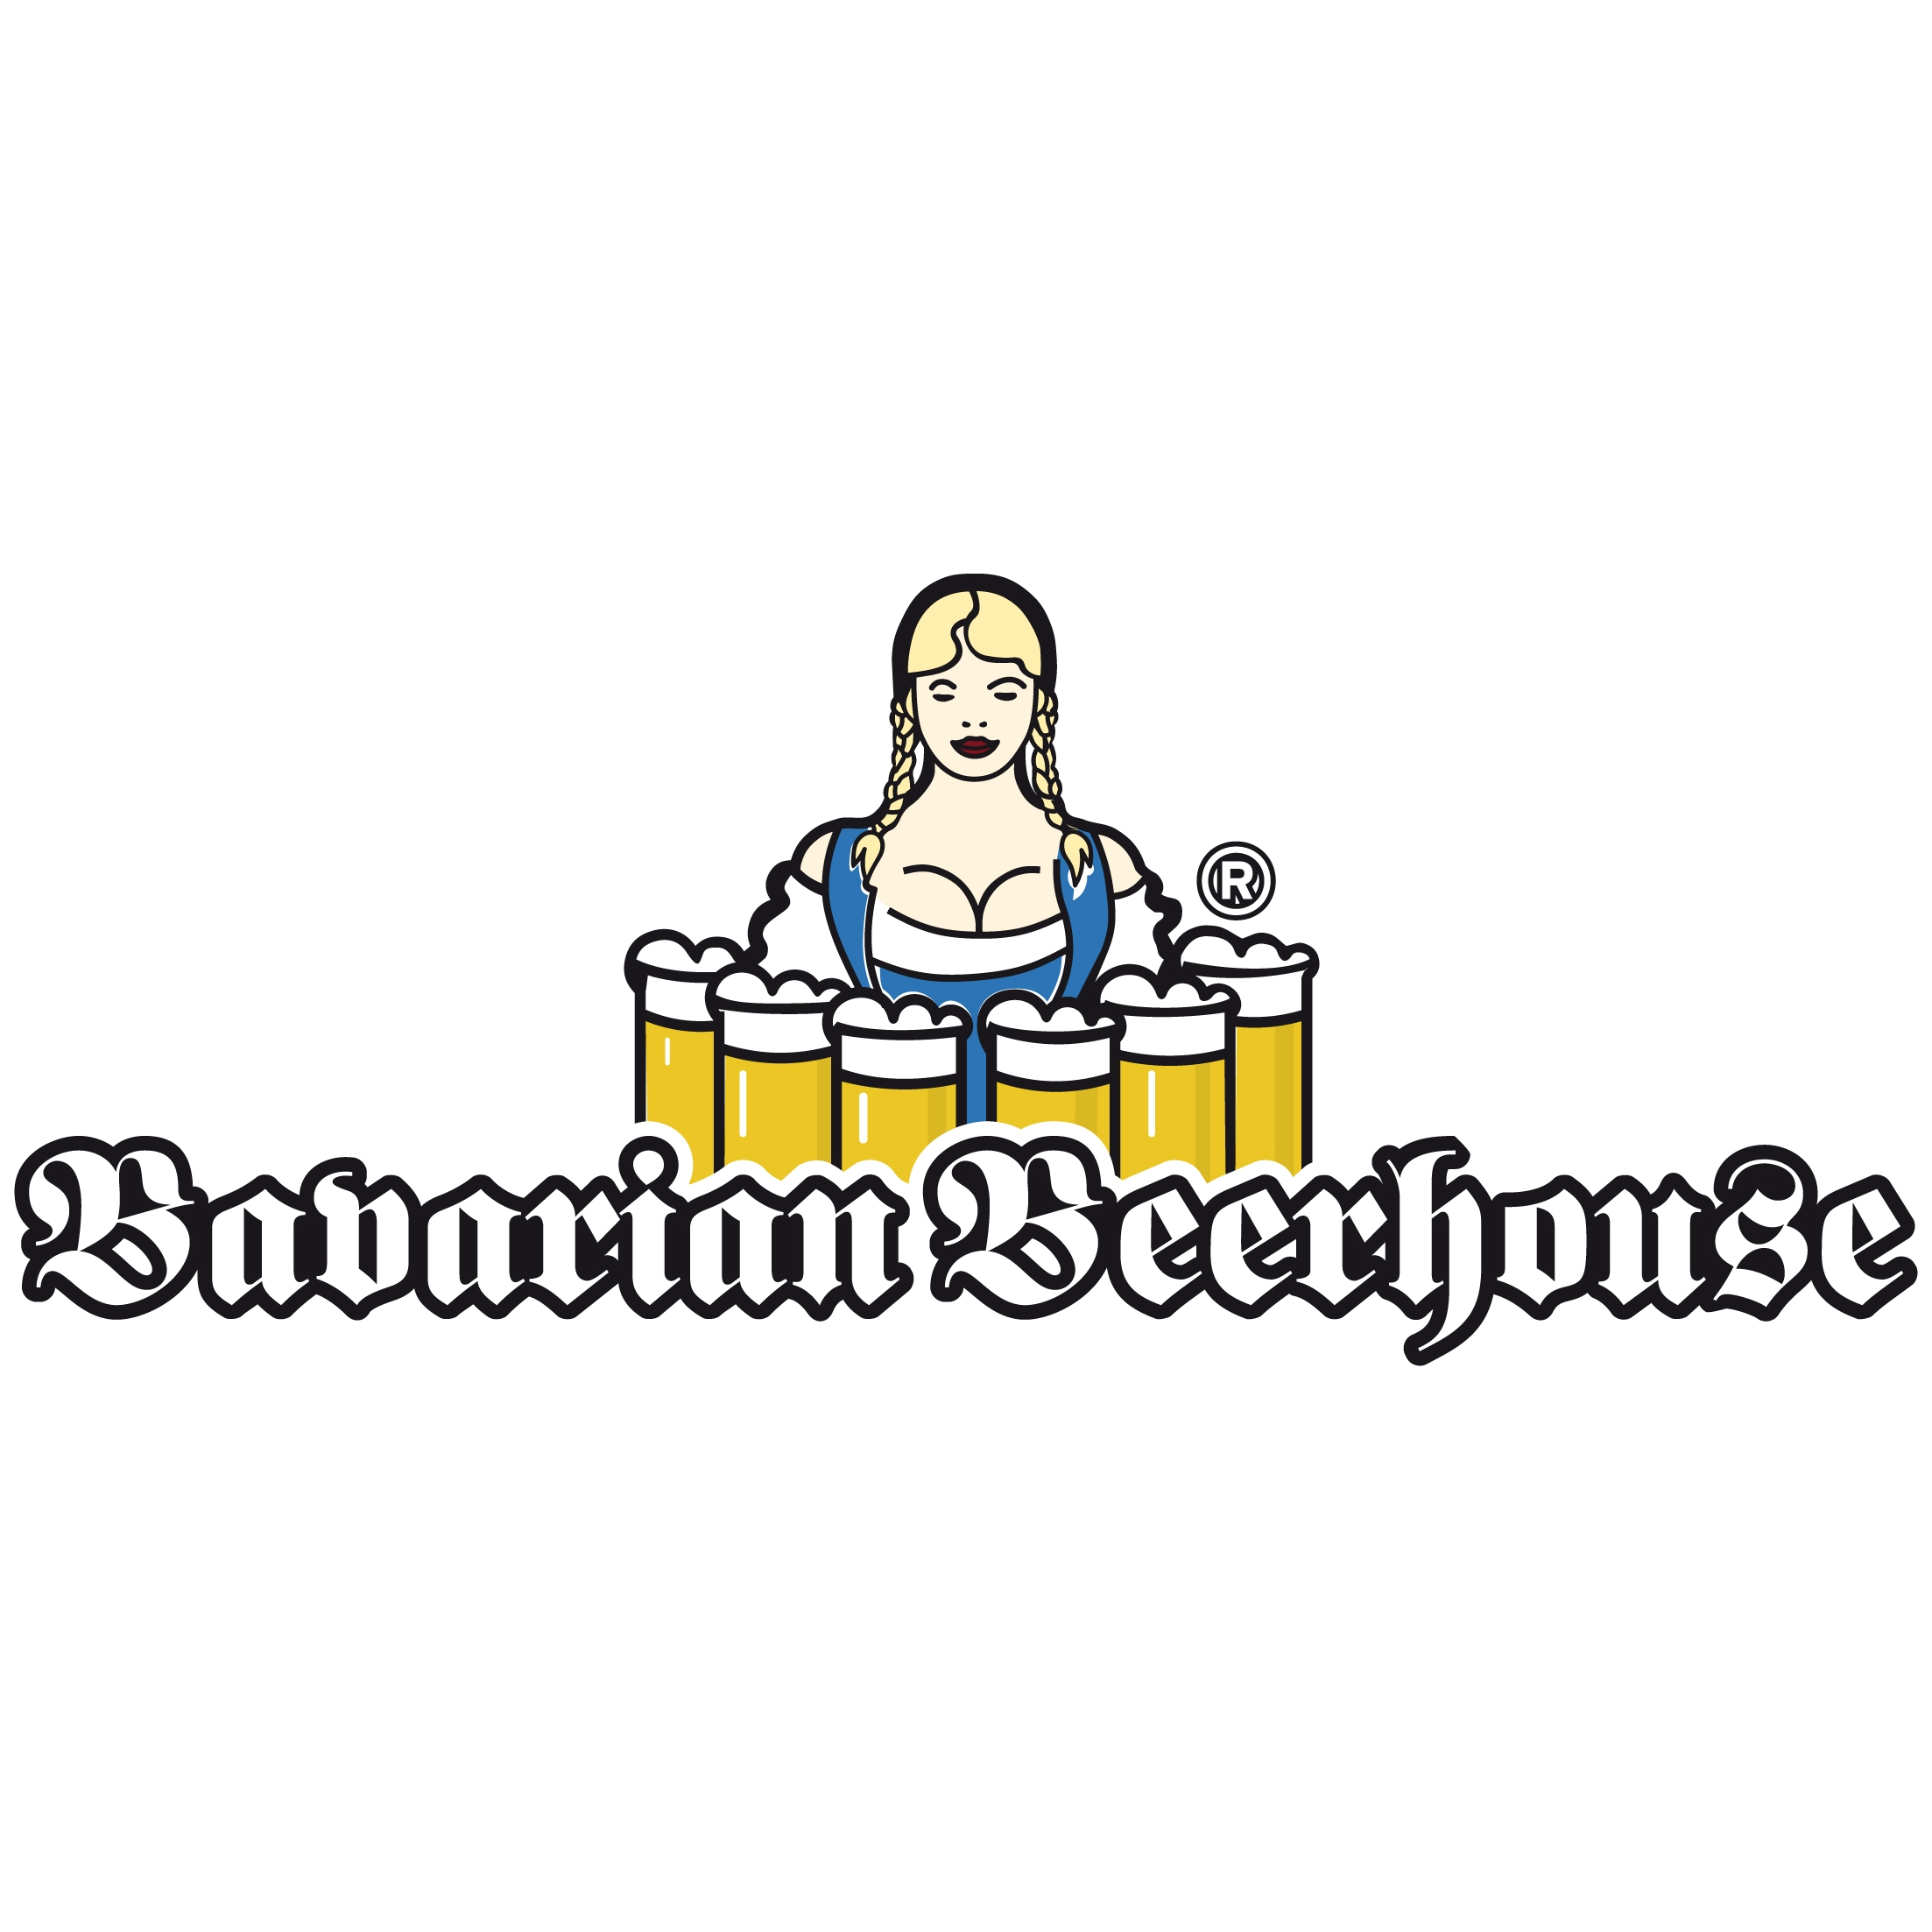 Bavarian Beerhouse Franchise